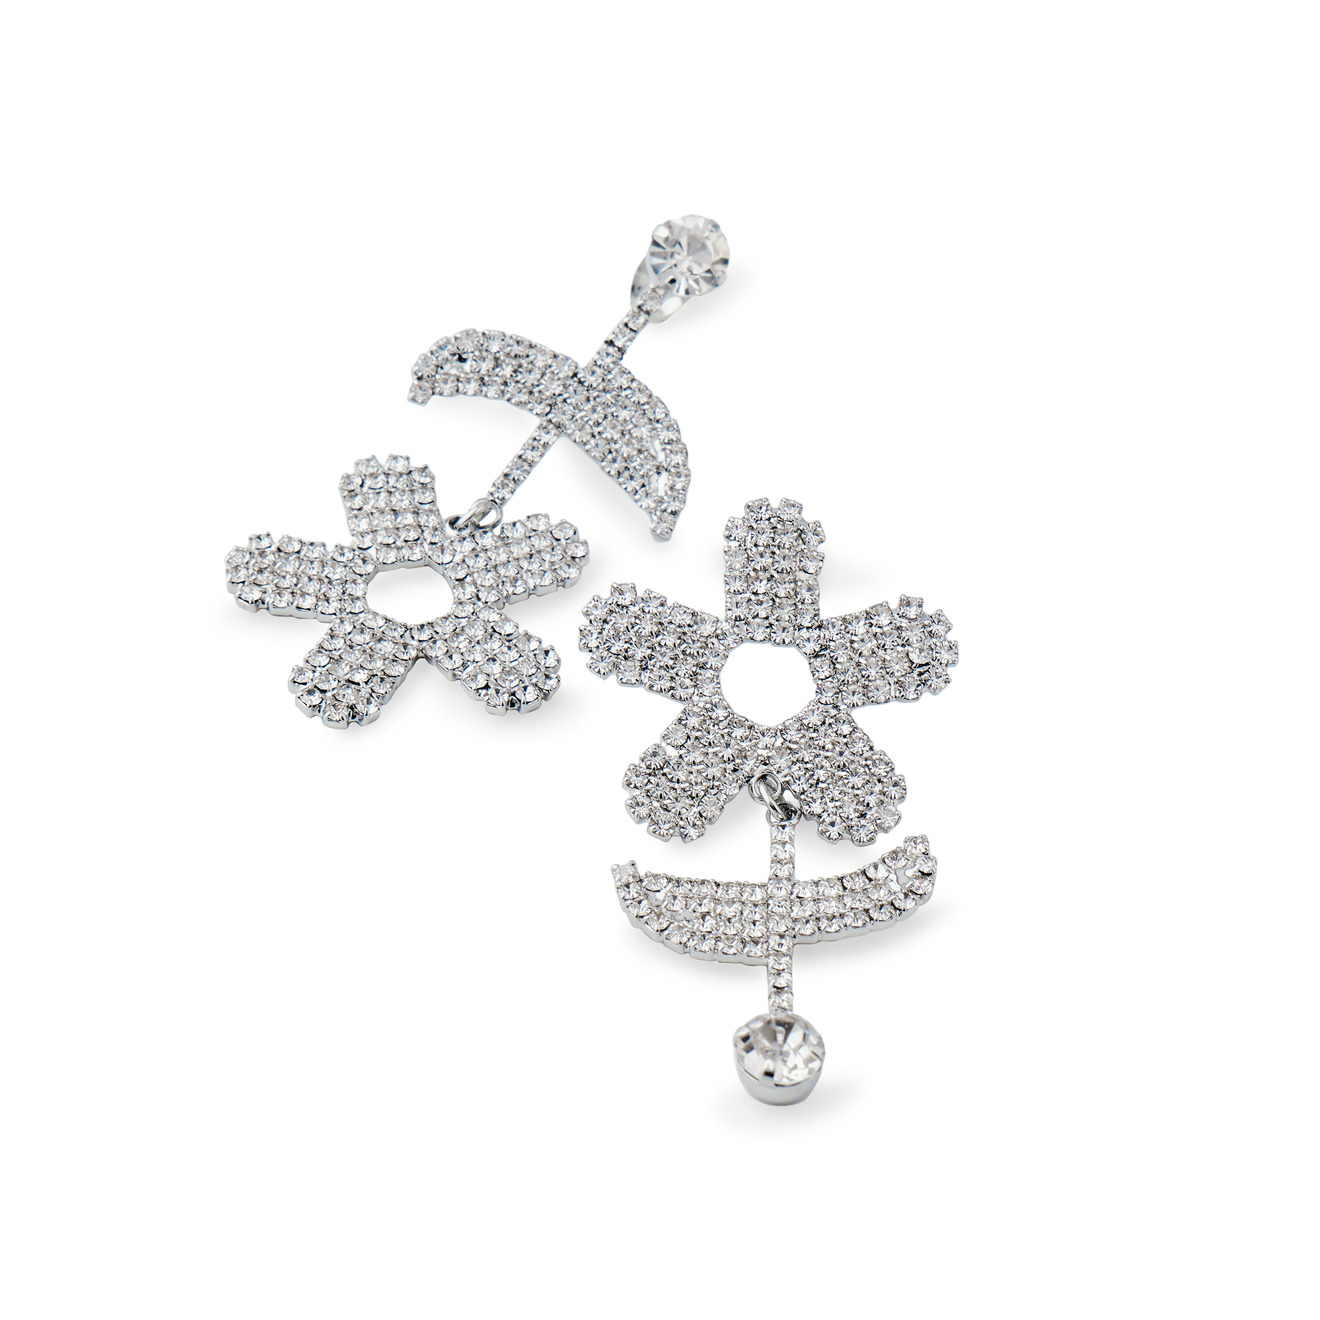 Herald Percy Серебристые серьги-цветы с кристаллами herald percy серебристые серьги крестики с кристаллами